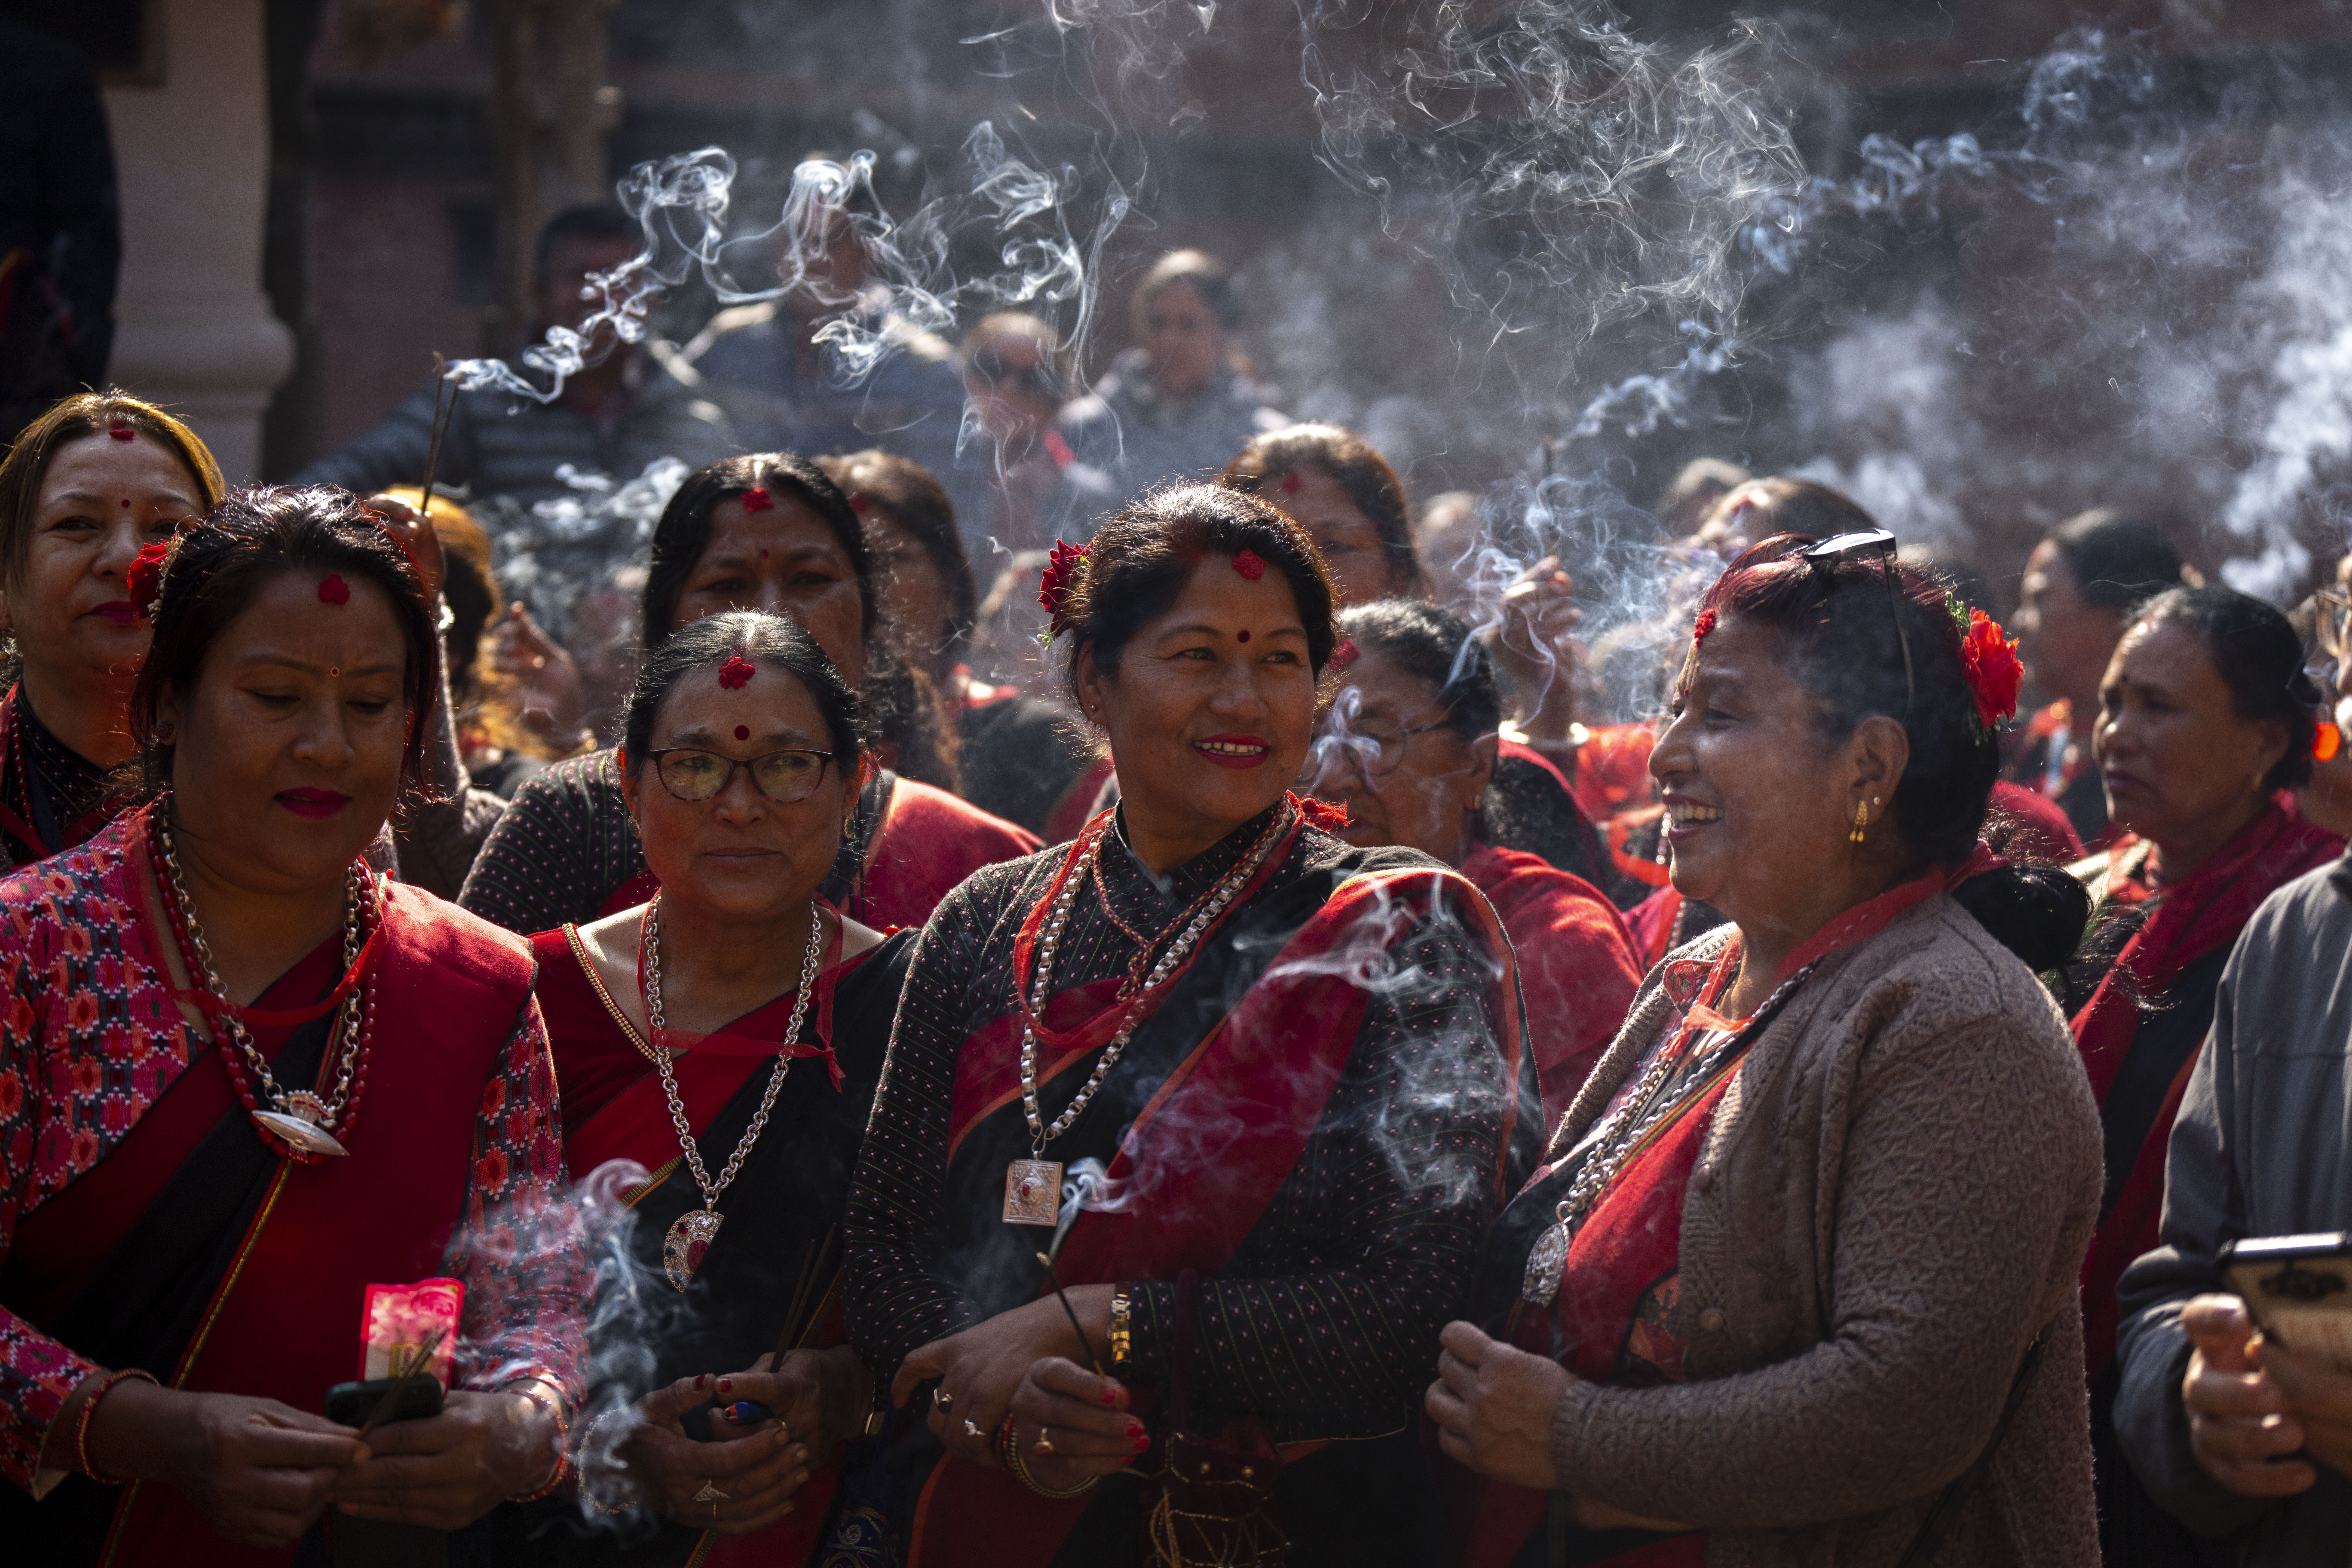 Demand For Reinstatement Of Nepal As Hindu Kingdom